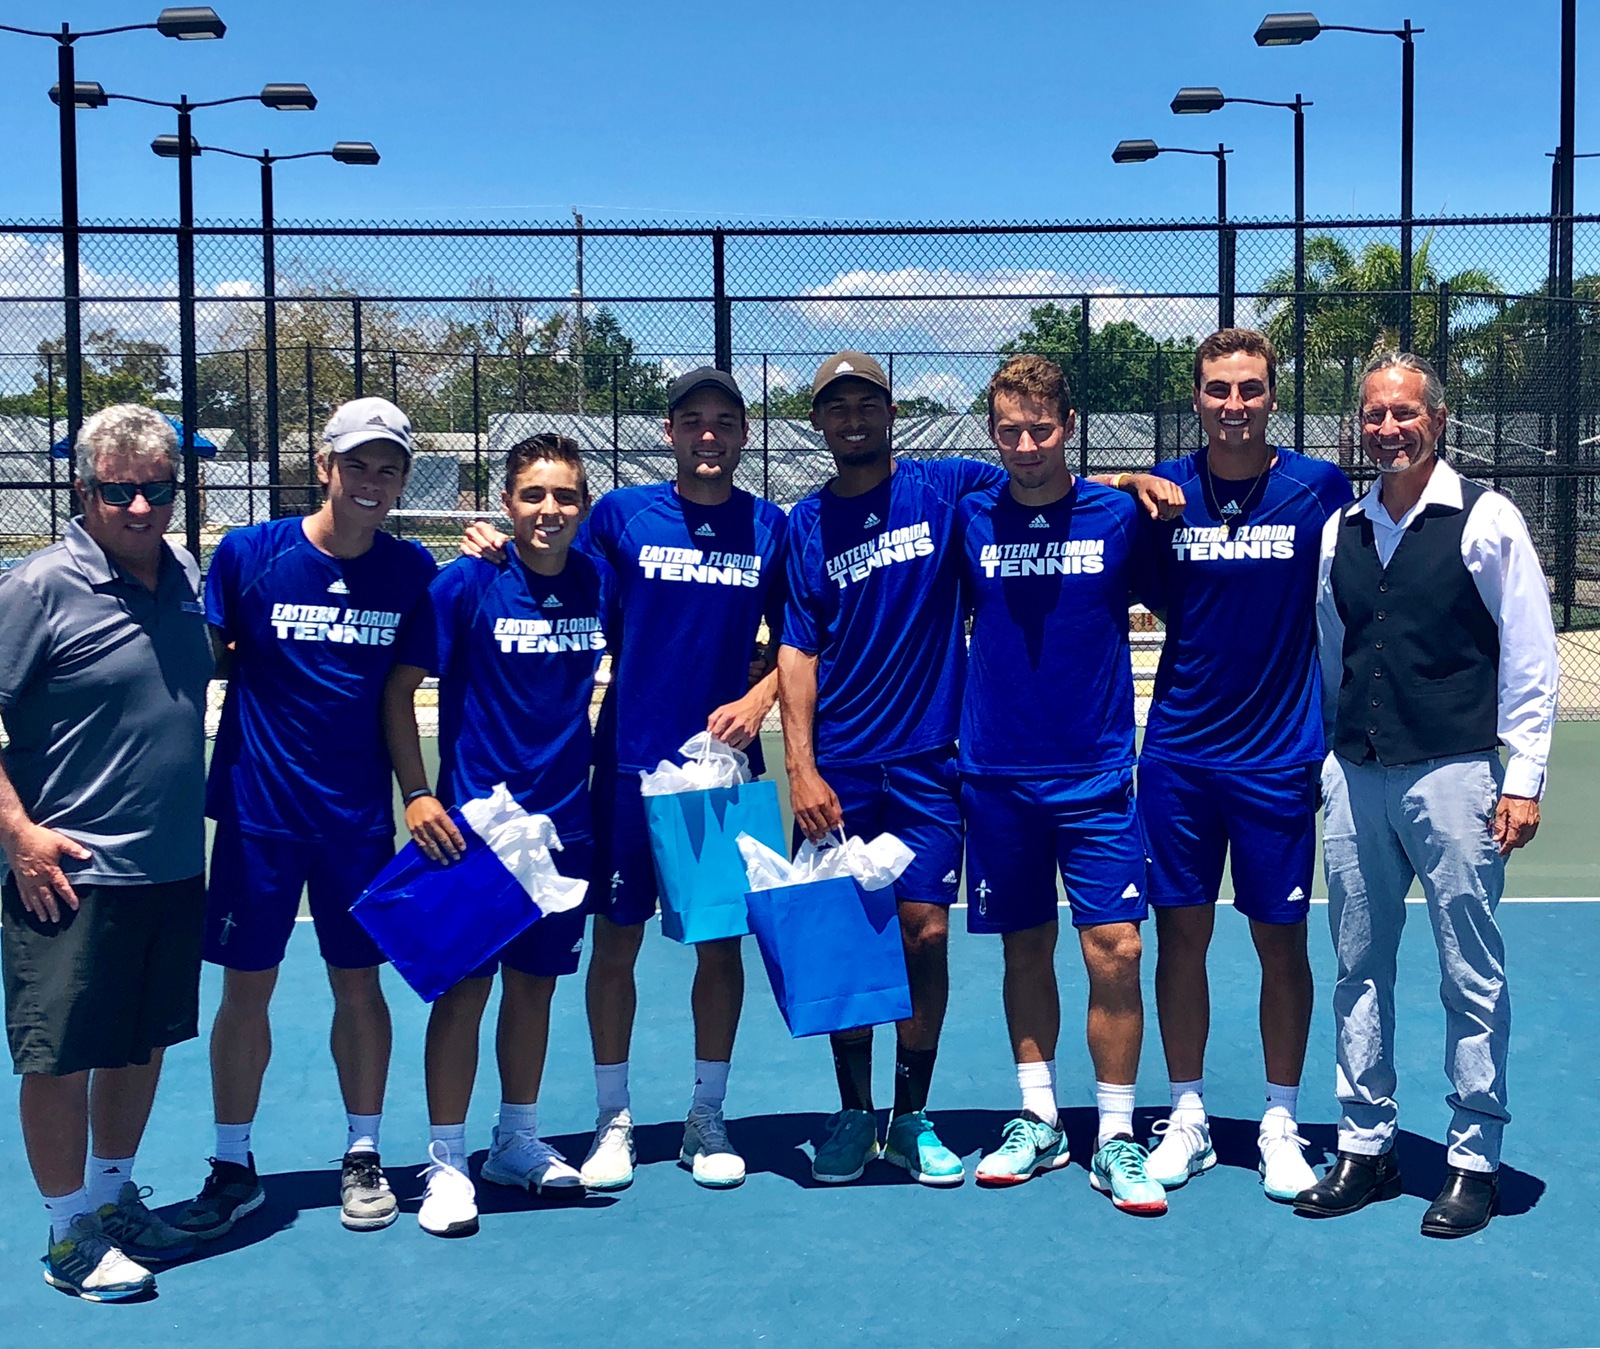 Men's tennis team prepared for national tournament in Arizona